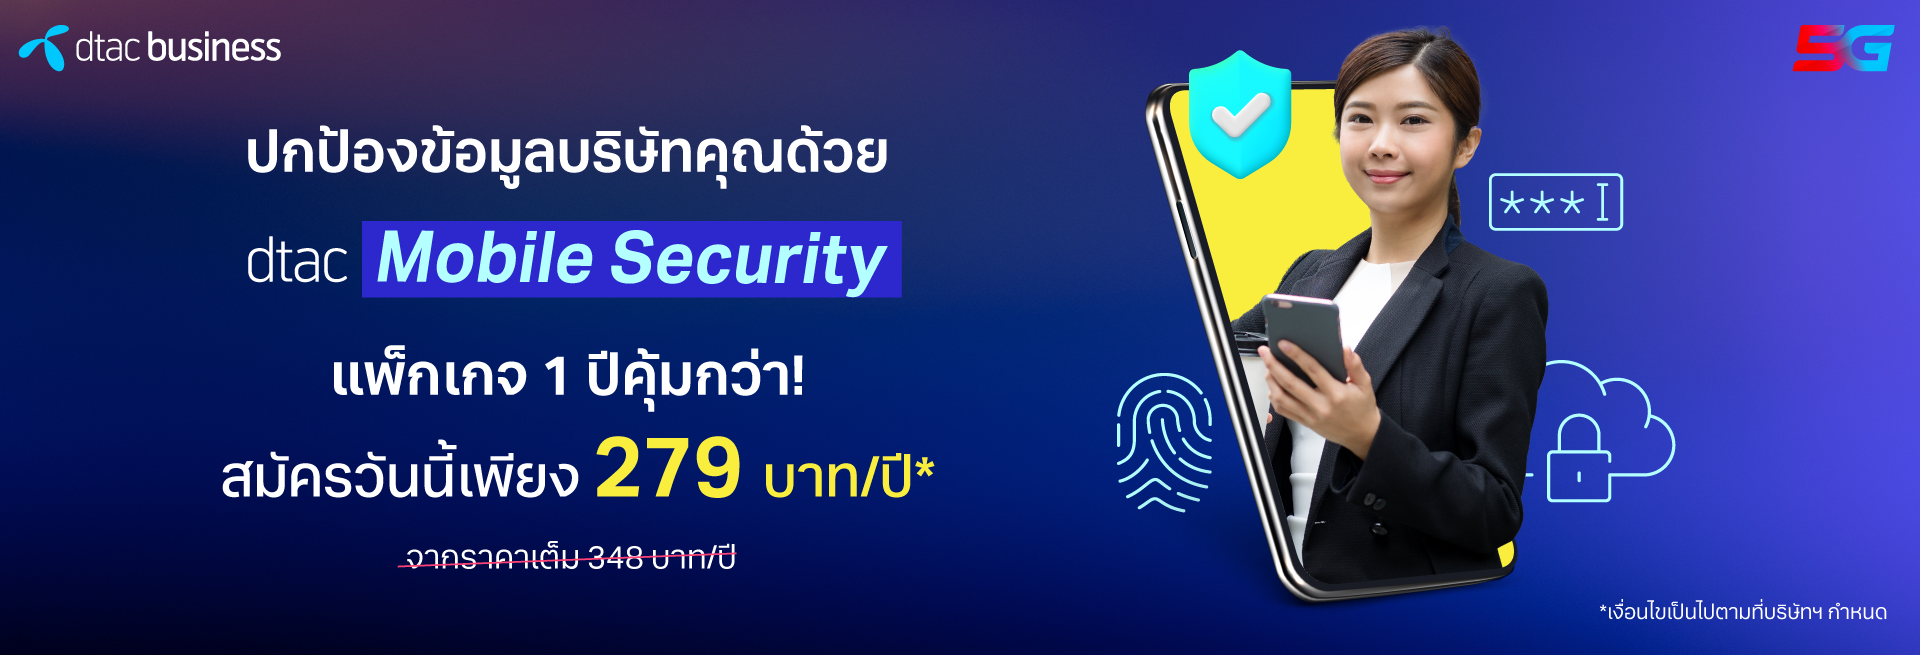 dtac-Mobile-Security_Promotion_1920x655